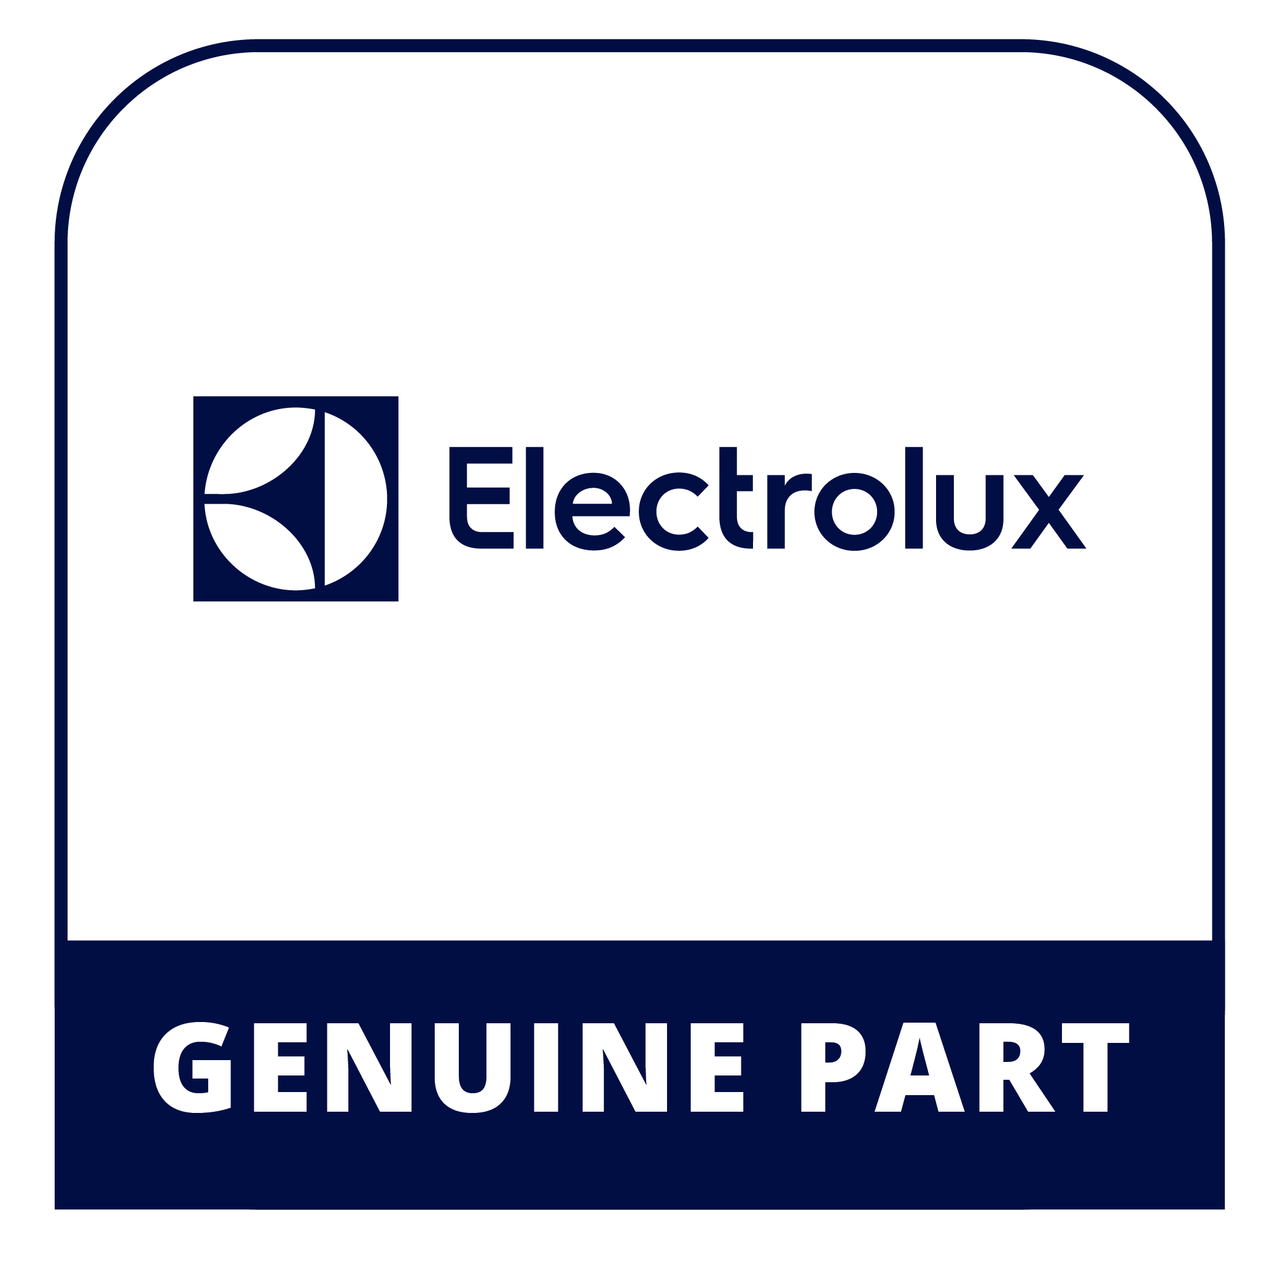 Frigidaire - Electrolux 5304500609 Trim - Genuine Electrolux Part